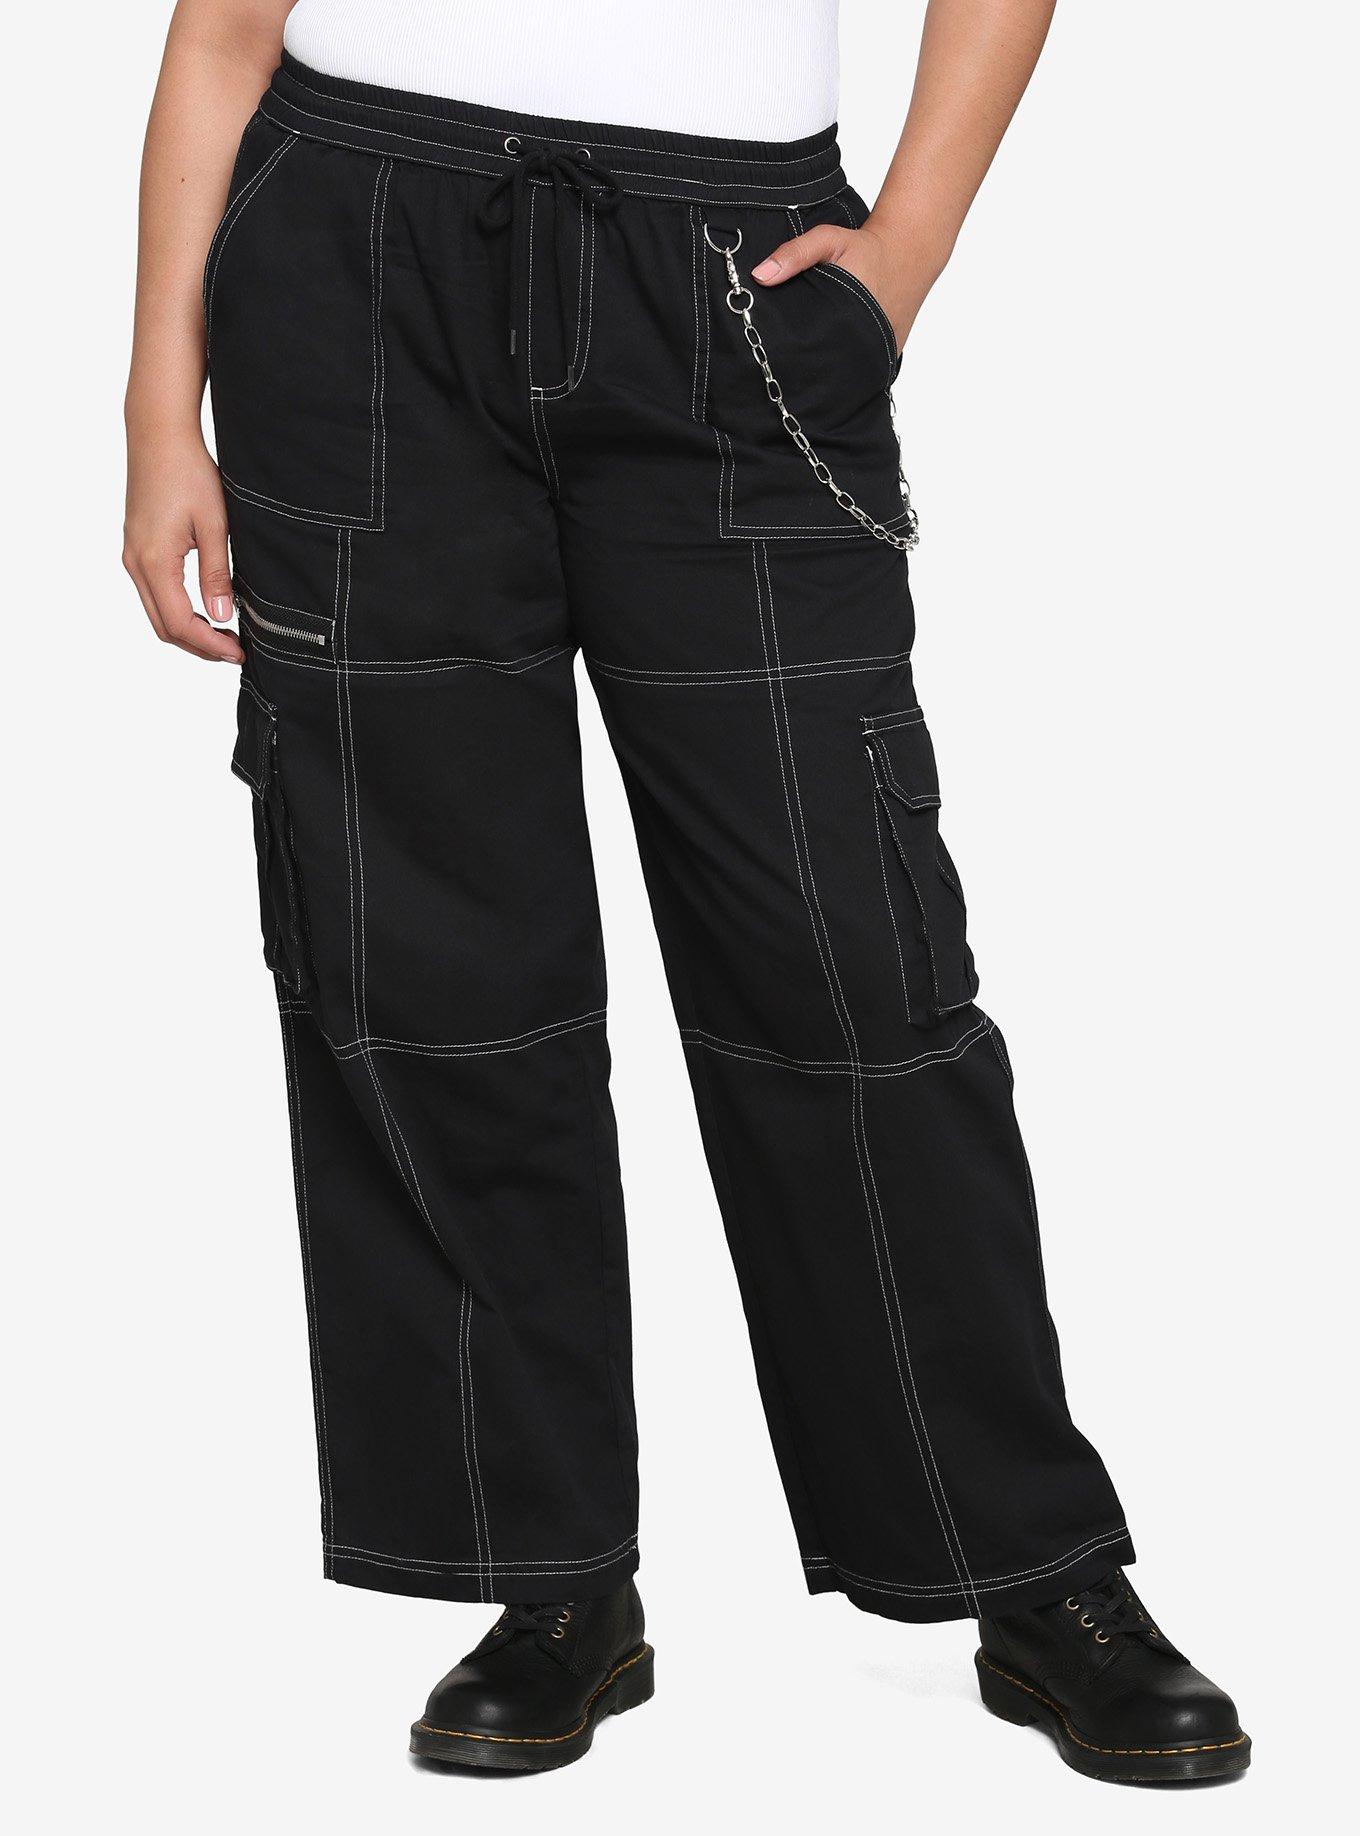 Black & White Stitch Chain Carpenter Pants Plus Size